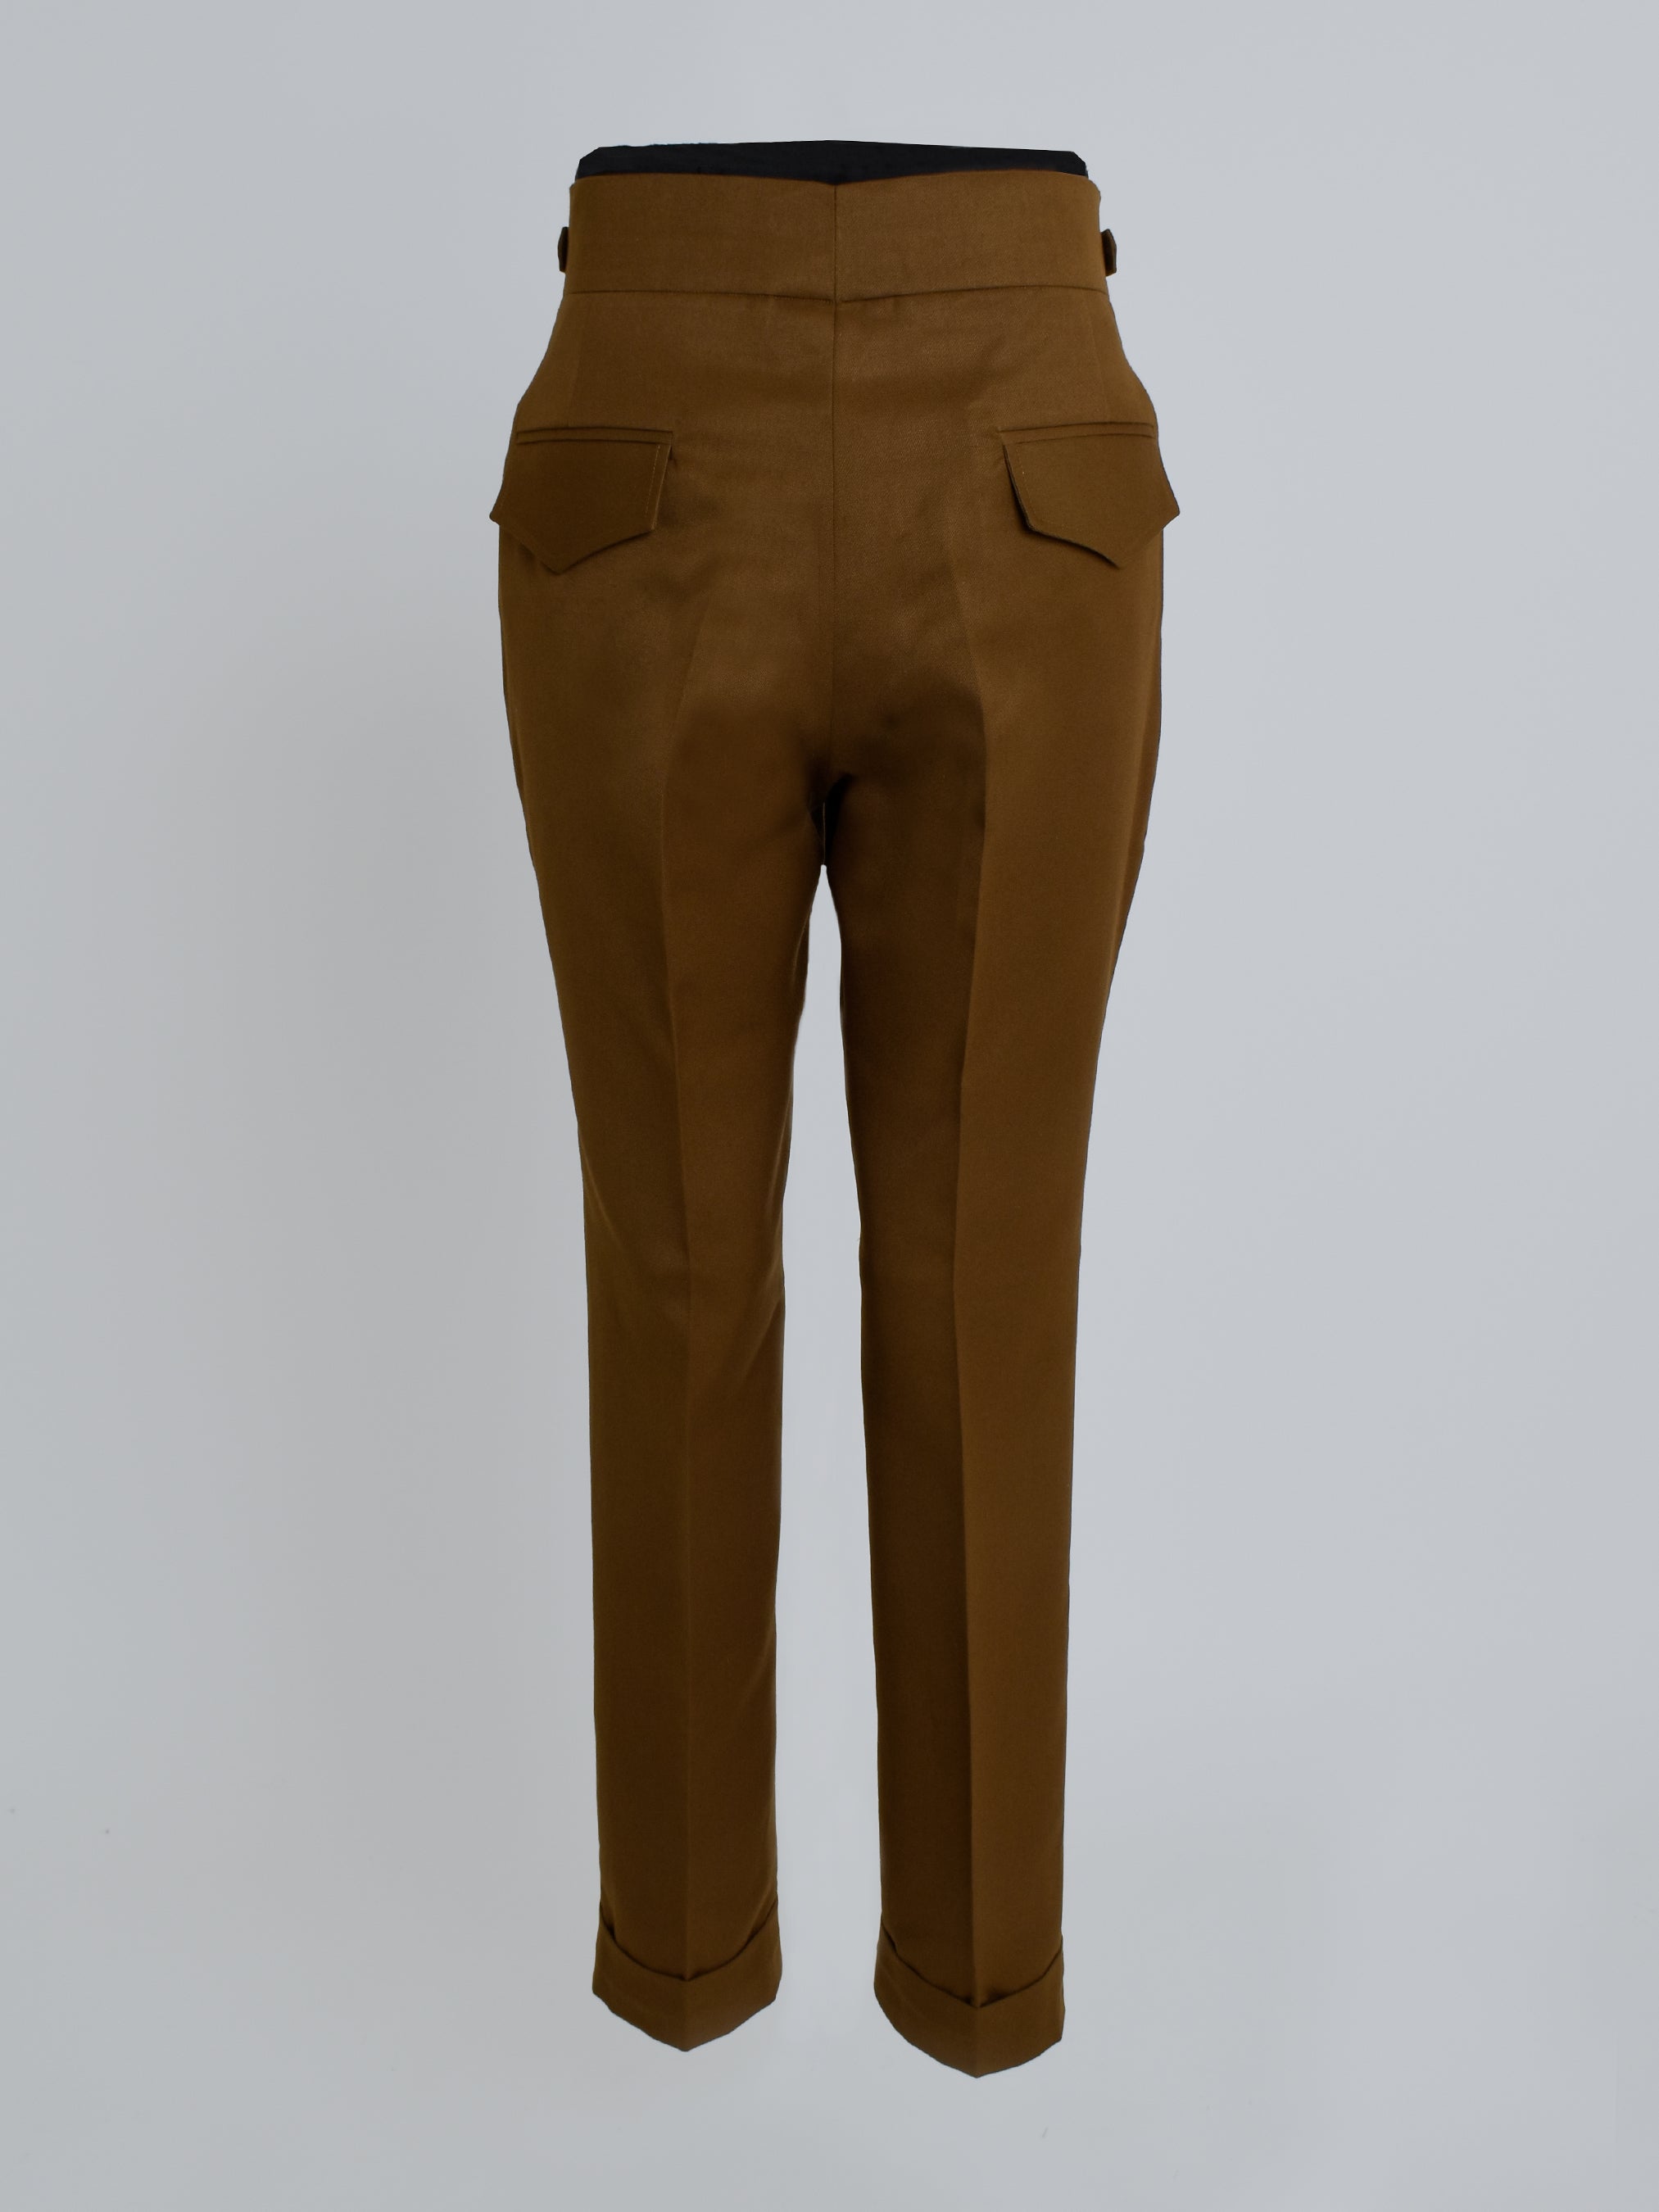 Regal Brown Corduroy Pant